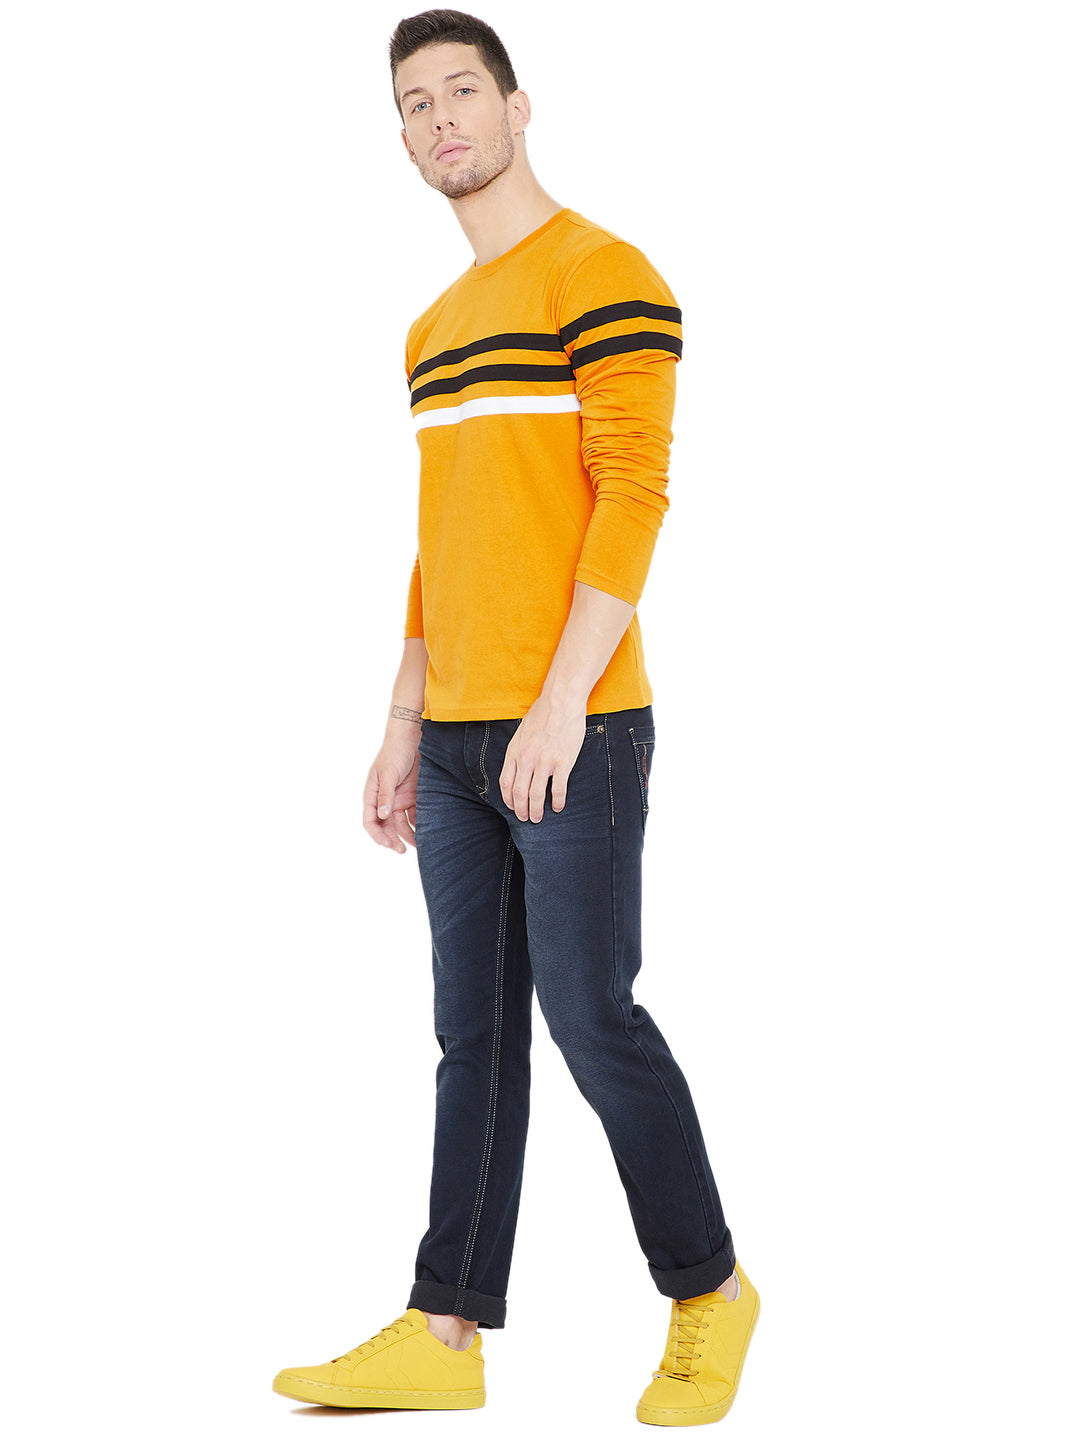 Yellow/Black/White Men Full Sleeves Round Neck Color Block T-Shirt